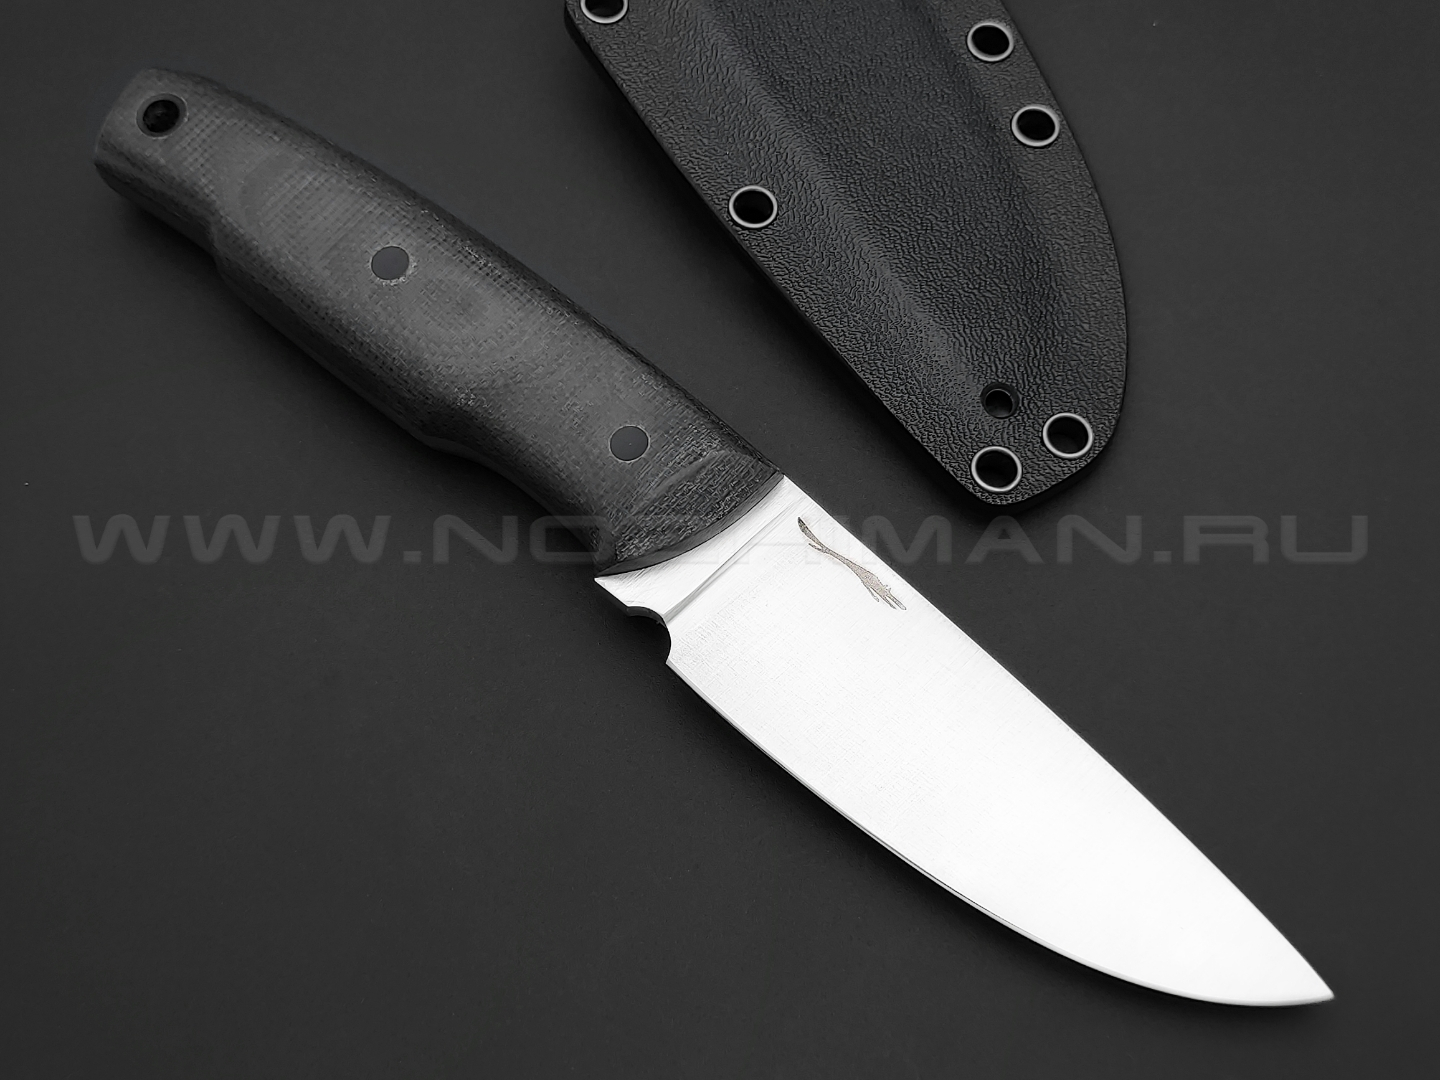 Волчий Век нож Mark-II прототип, сталь Niolox WA, рукоять микарта